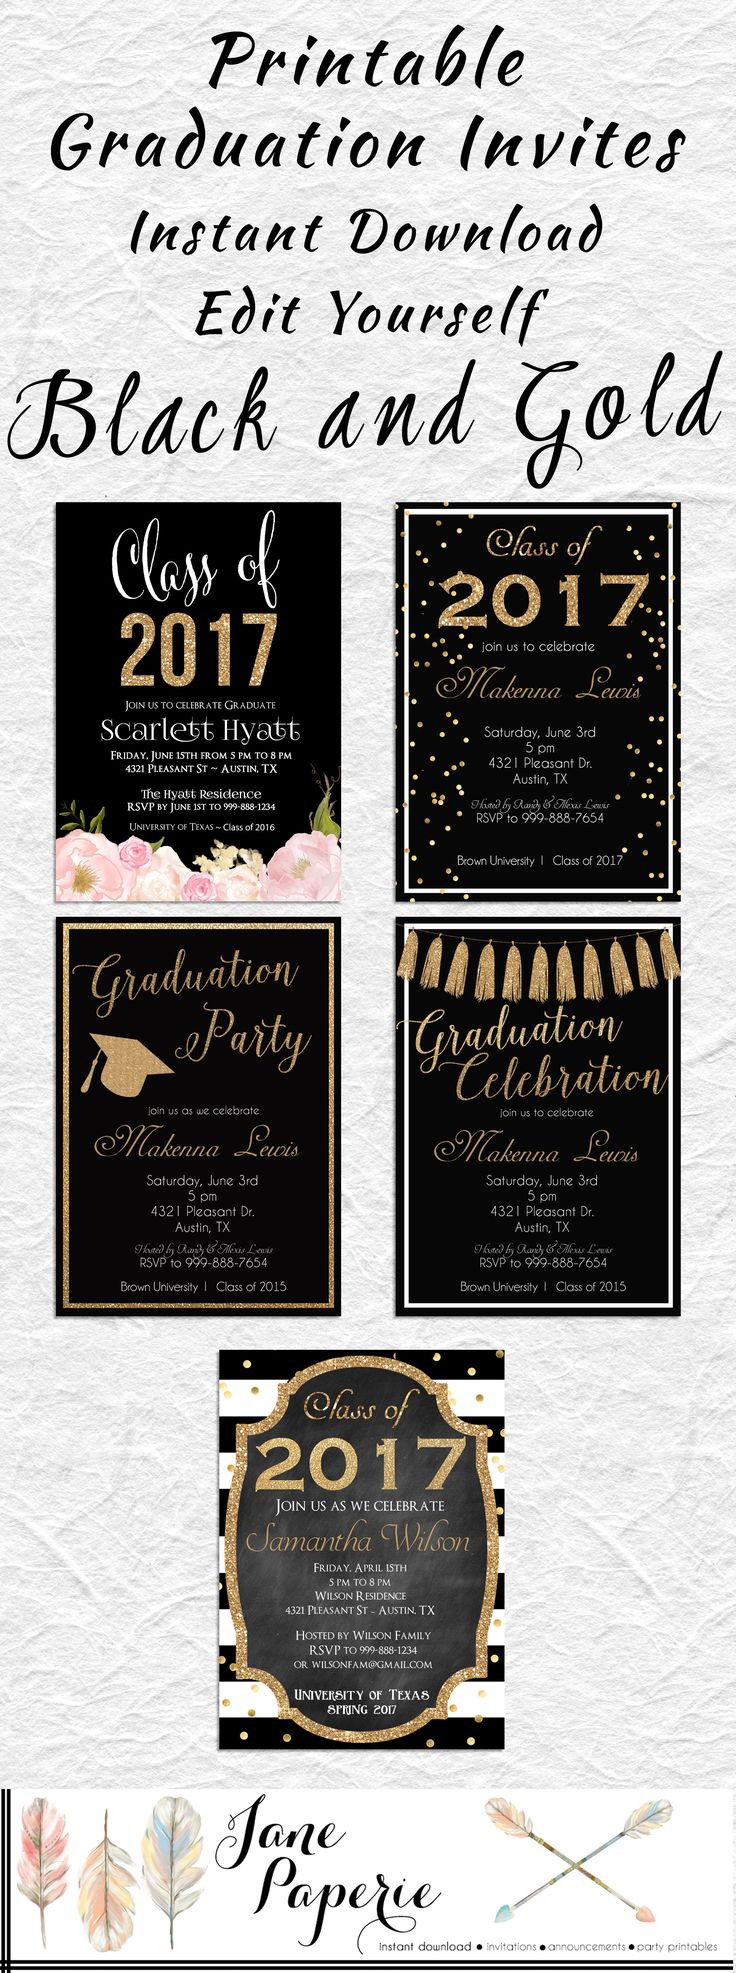 Graduation Party Invitations Ideas
 Best 25 High school graduation invitations ideas on